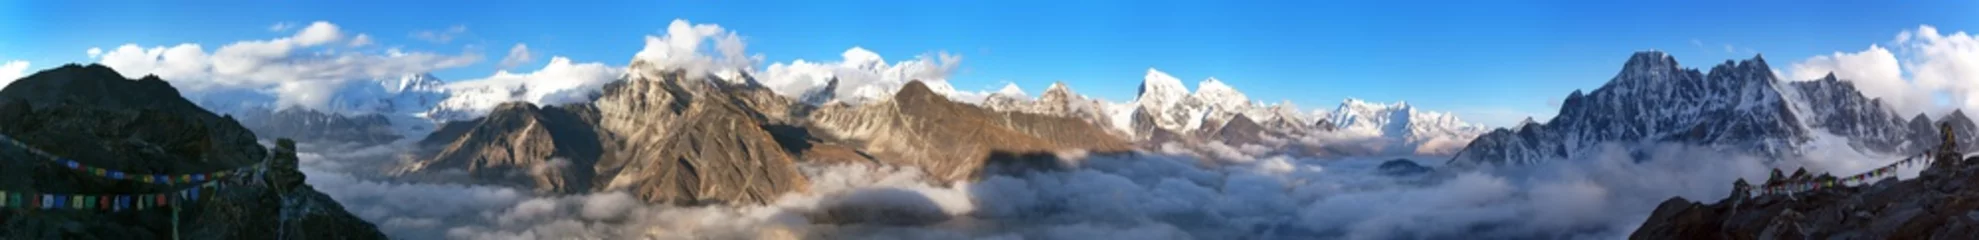 Fototapete Cho Oyu Mount Everest, Lhotse, Makalu and Cho Oyu panorama